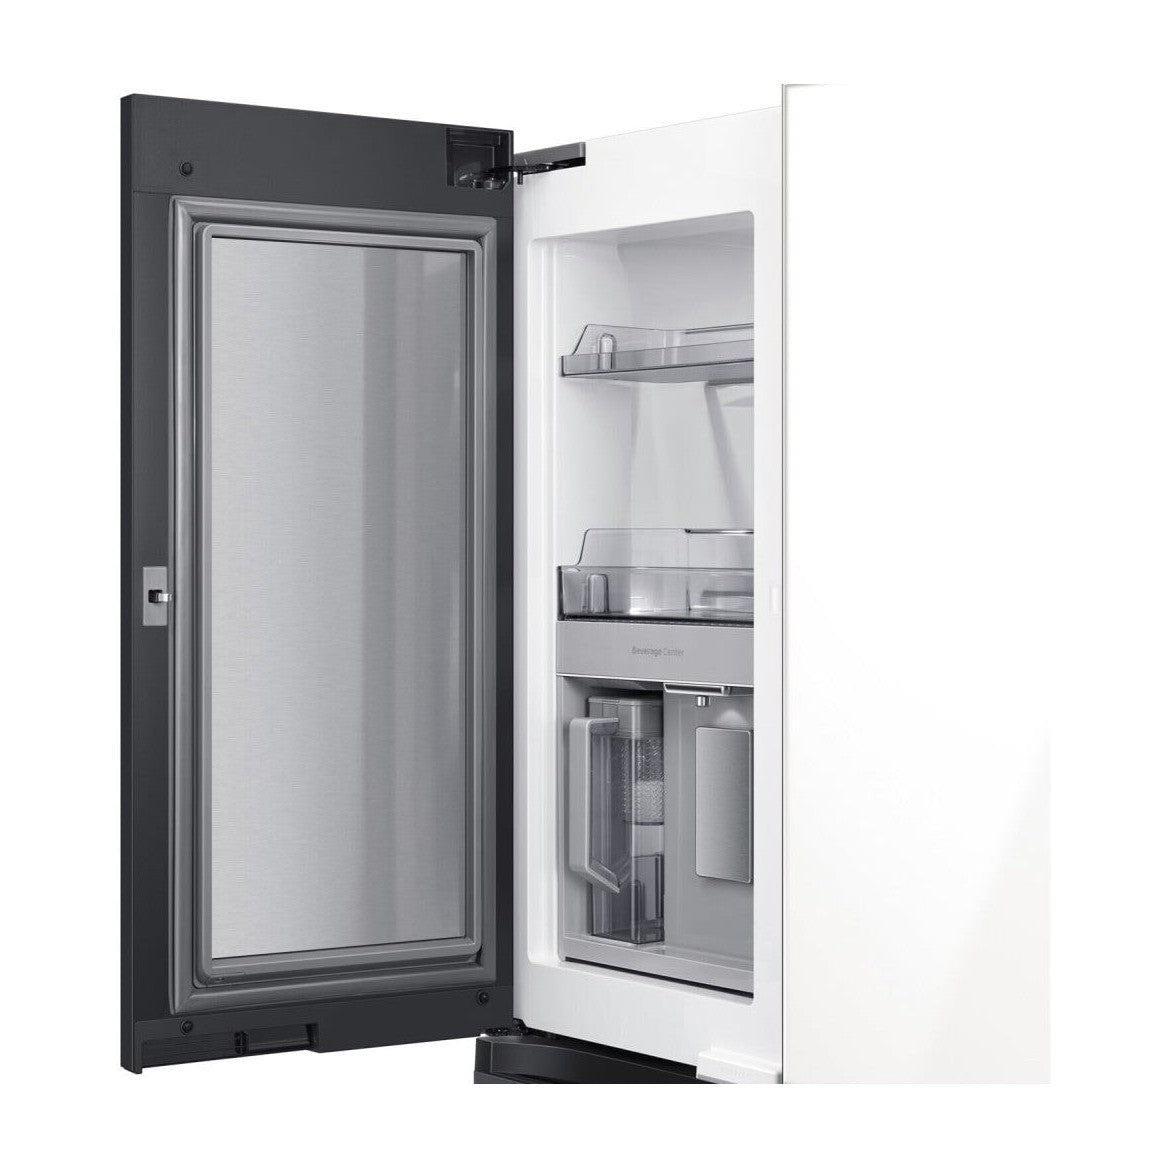 SAMSUNG RF29A967535/AA Bespoke 4-Door Flex™ Refrigerator (29 cu. ft.) in White Glass